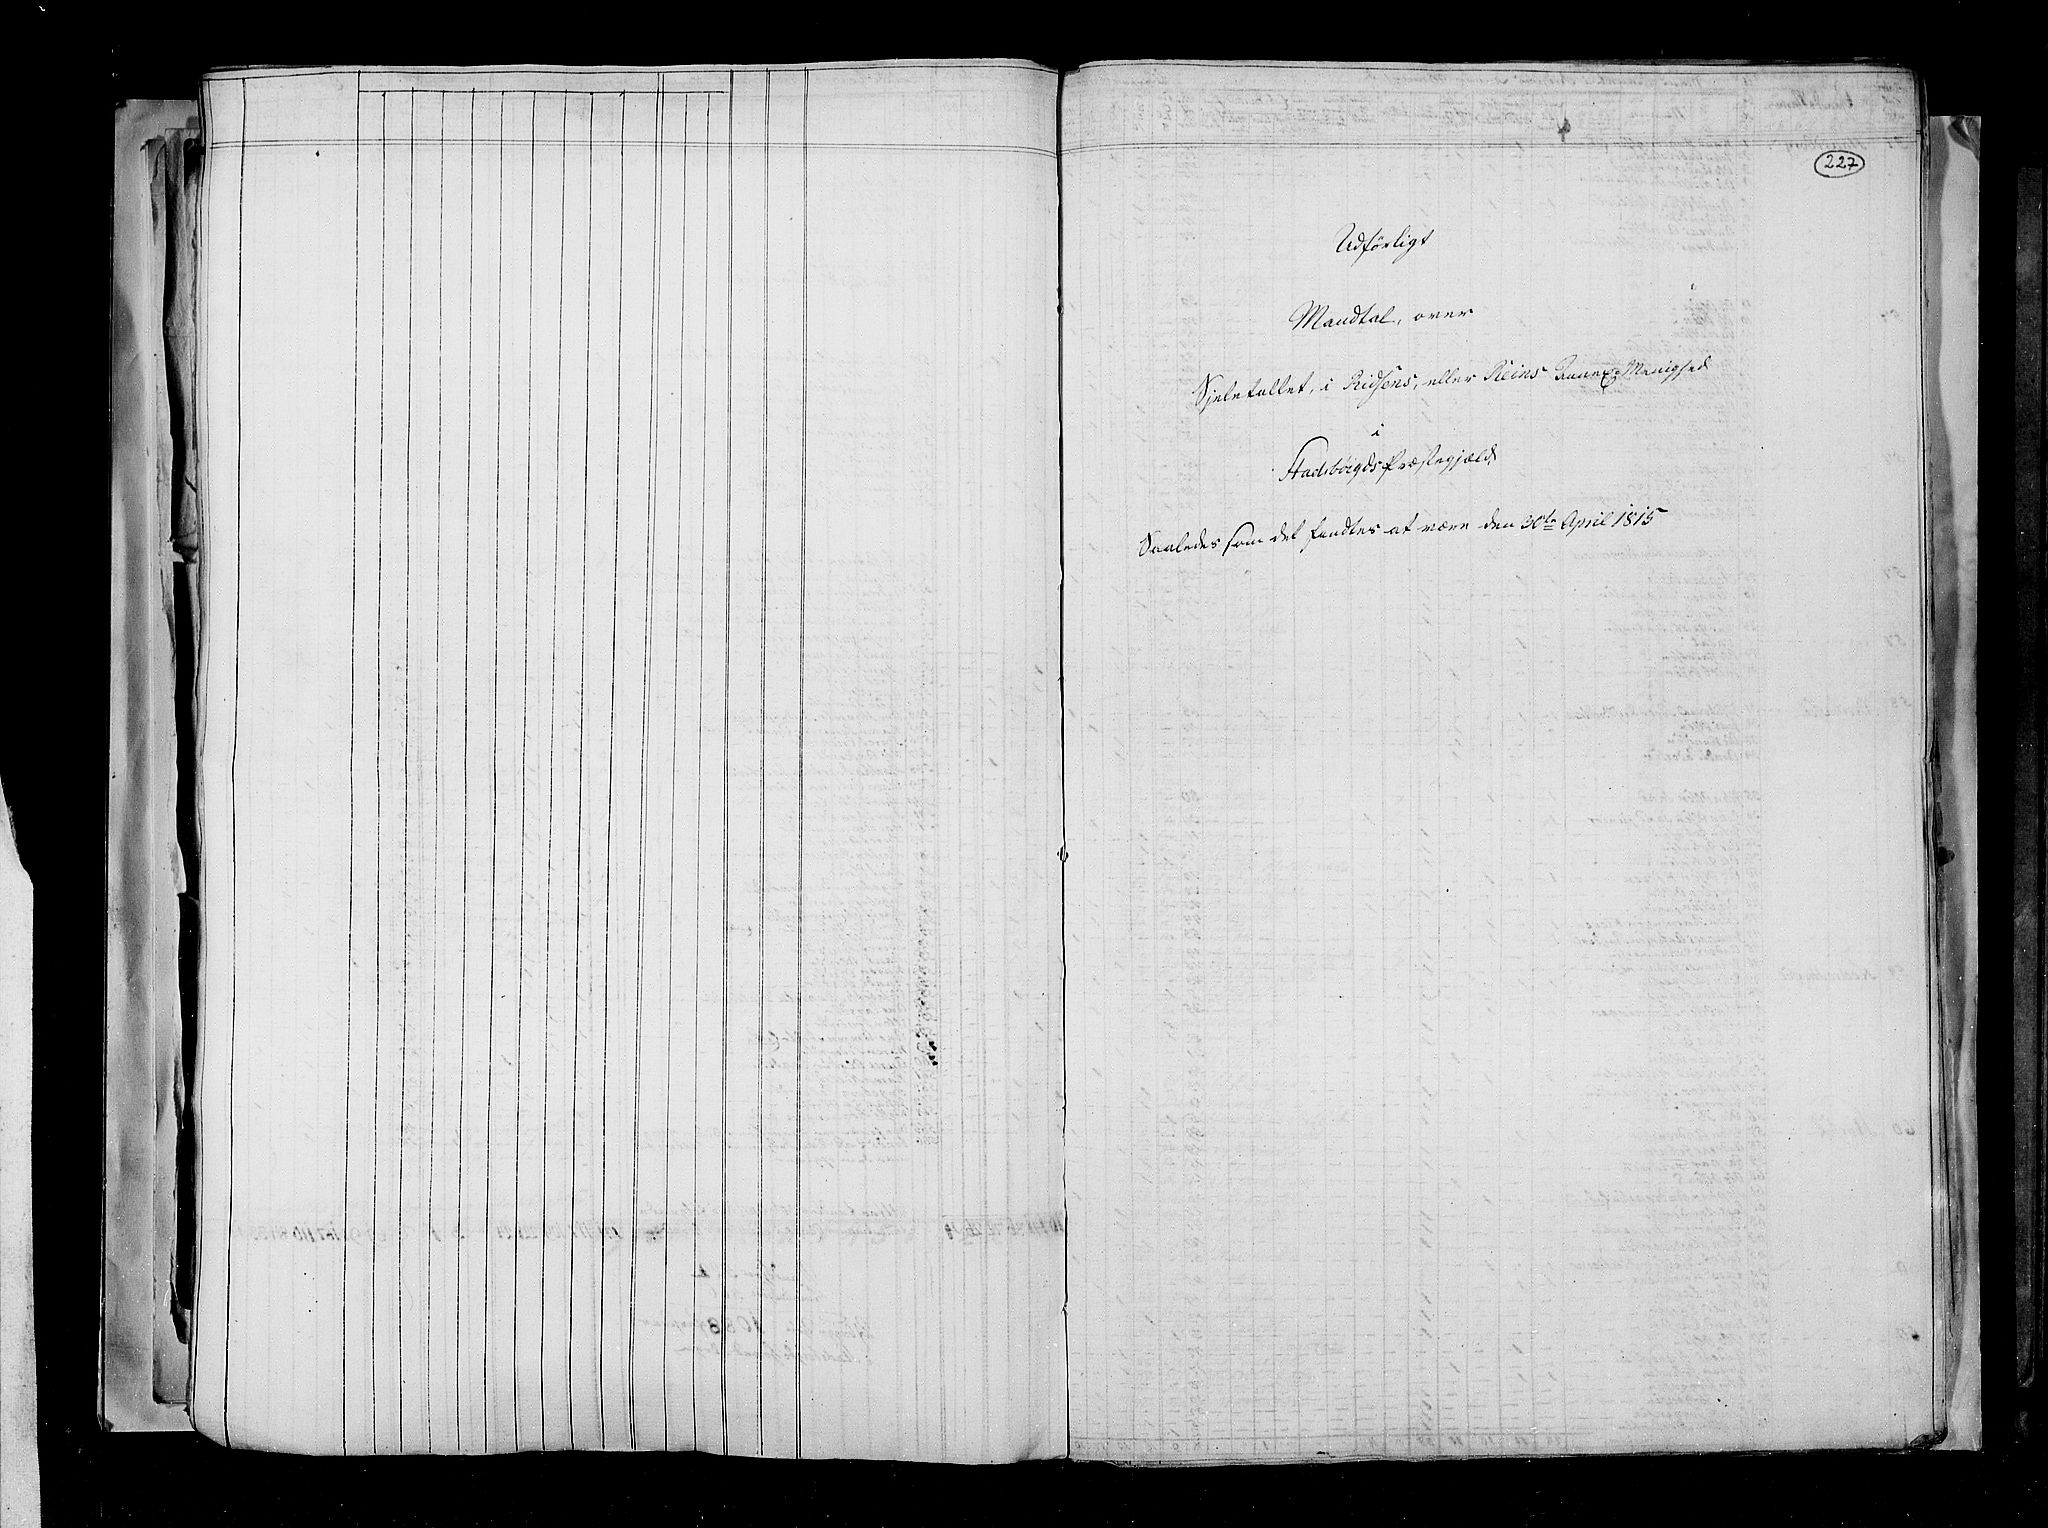 RA, Census 1815, vol. 2: Bergen stift and Trondheim stift, 1815, p. 145